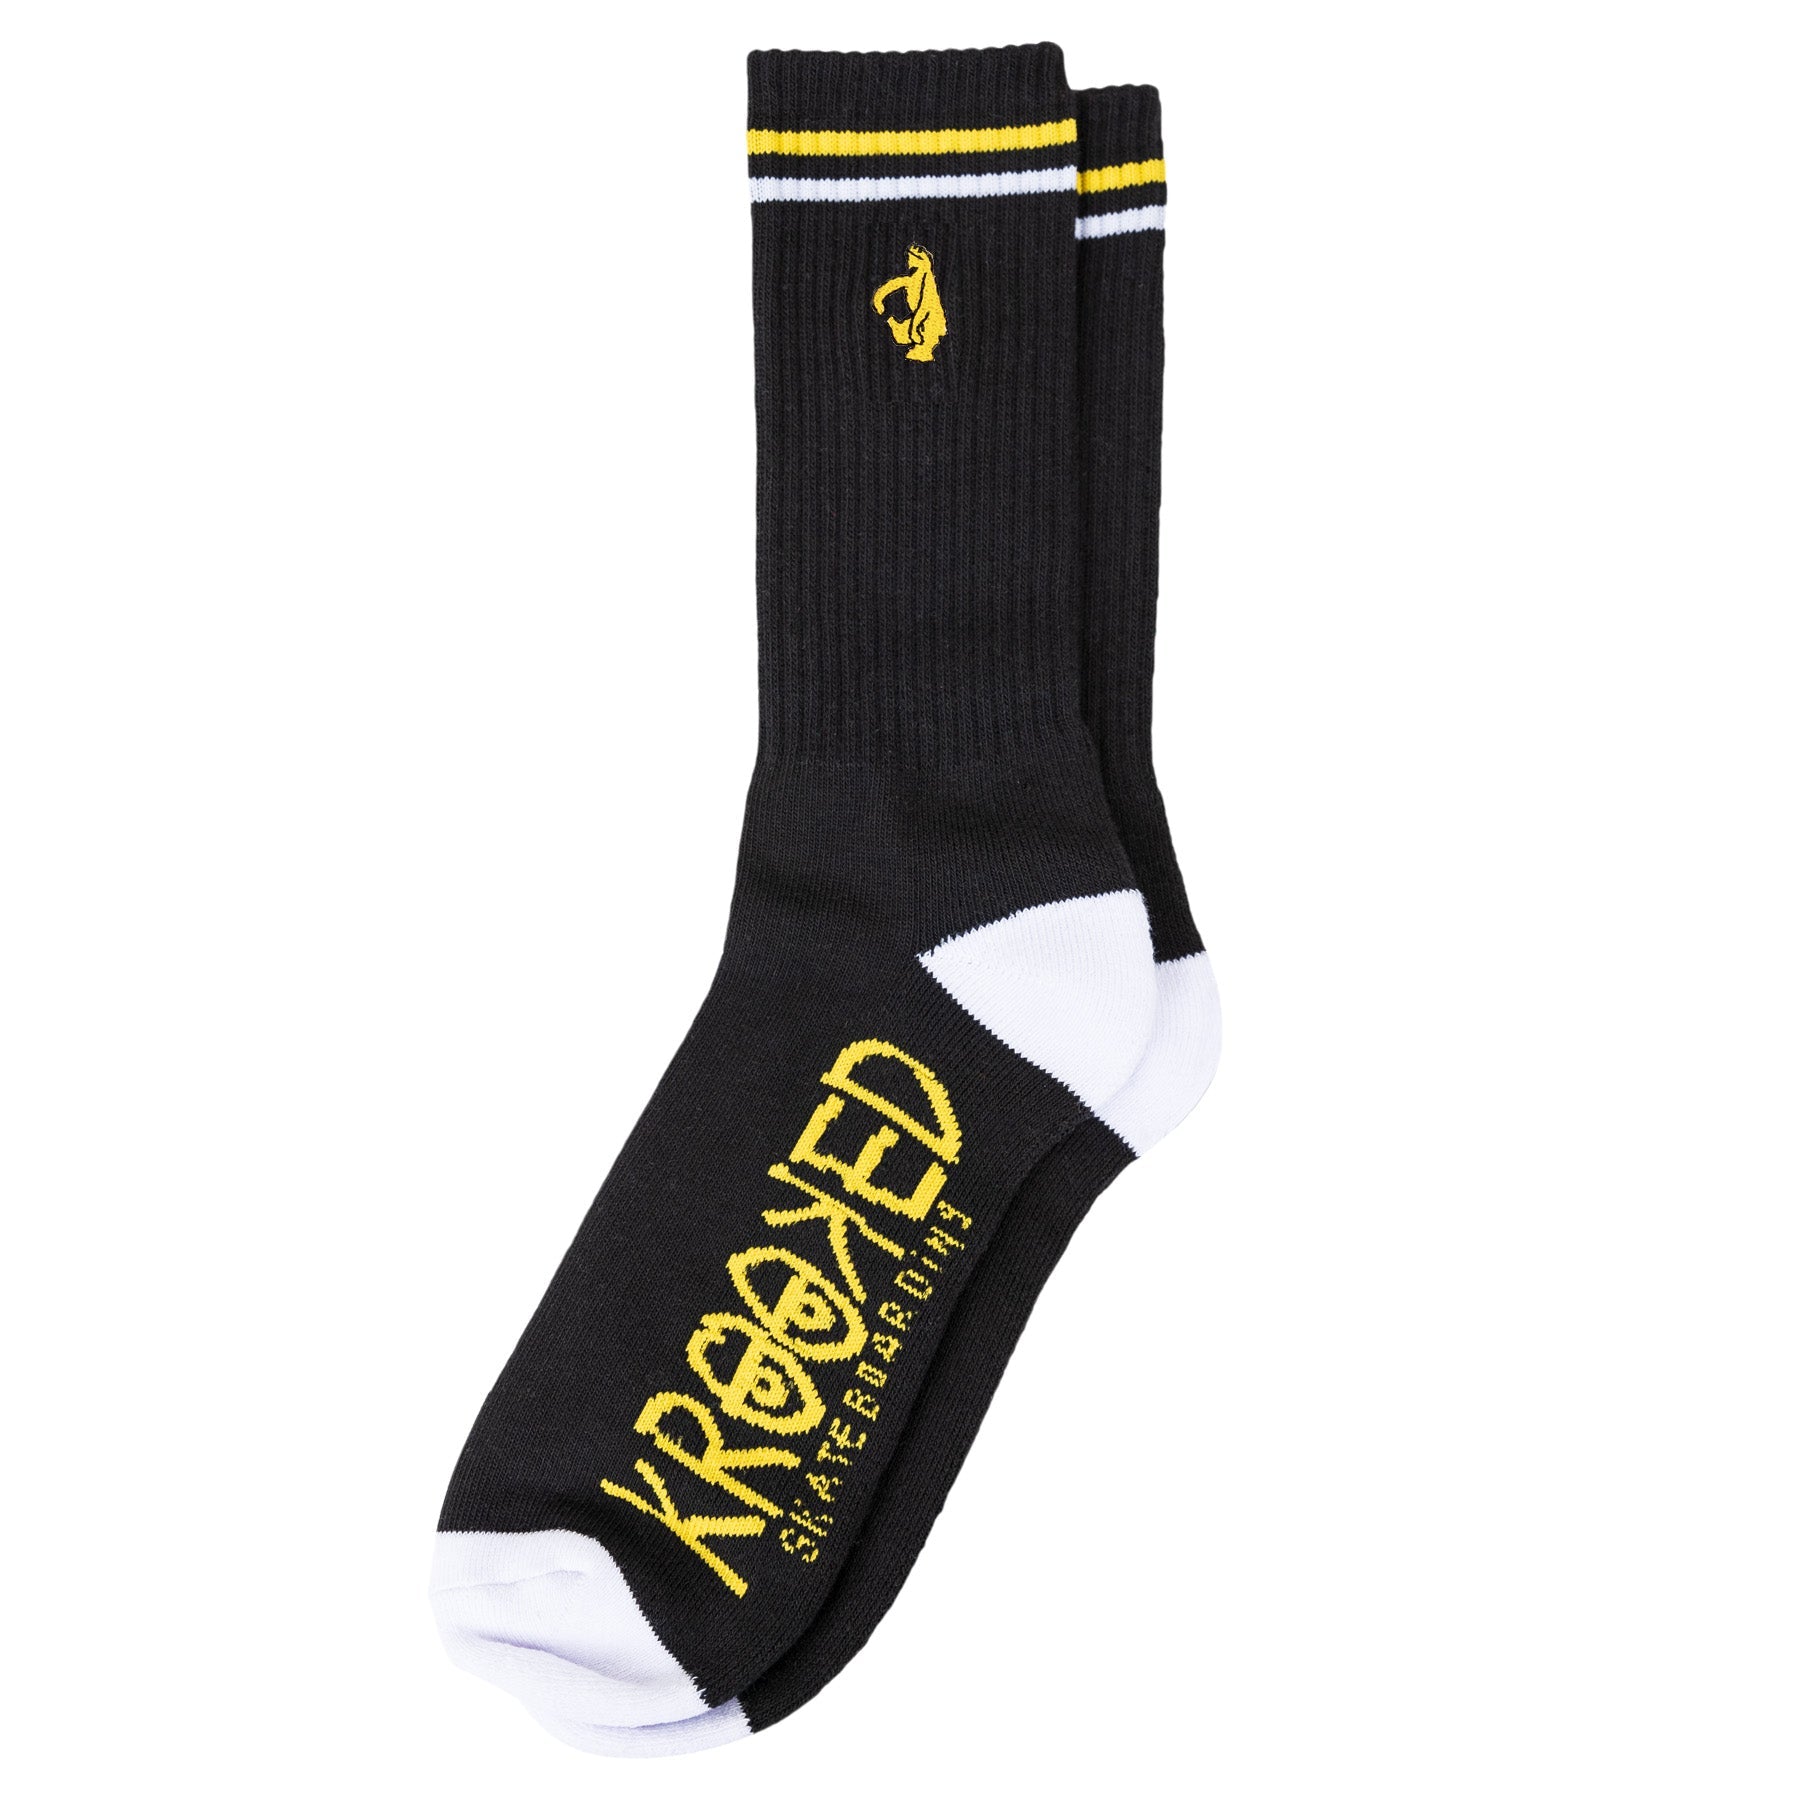 Krooked Shmoo Emb Sock, black/white/yellow - Tiki Room Skateboards - 1